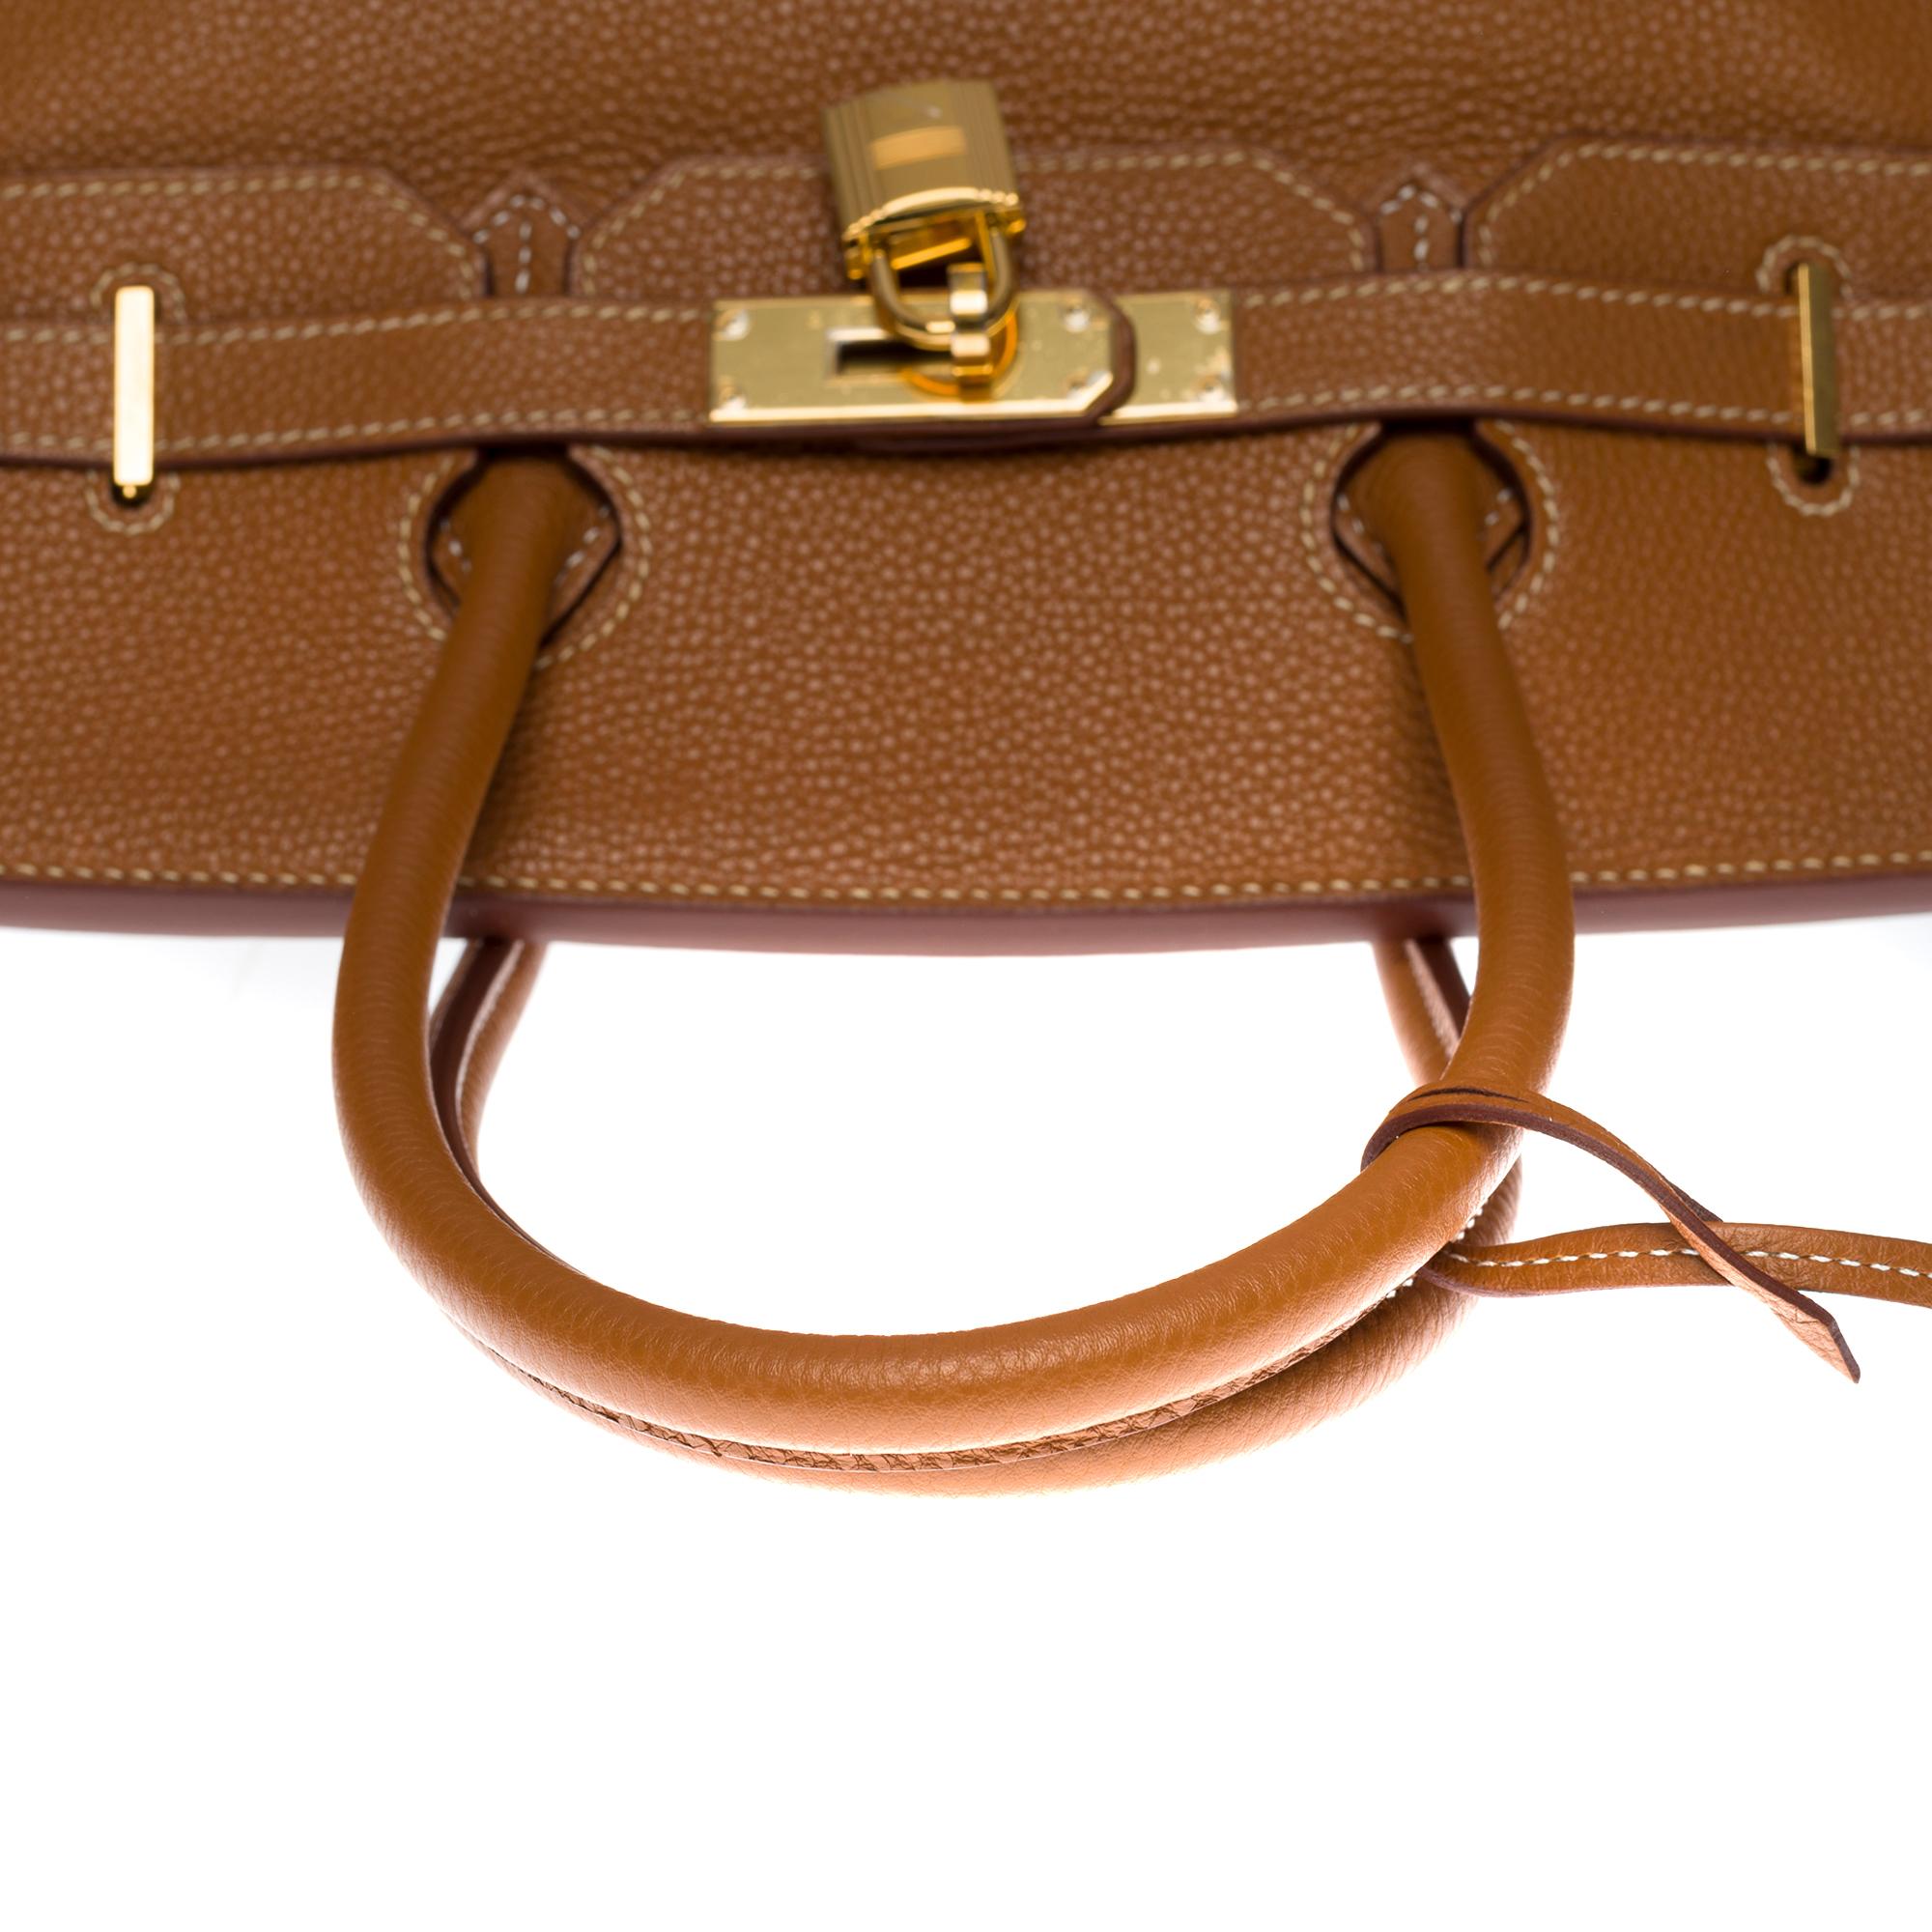 Amazing Hermès Birkin 35 handbag in Camel Togo leather, GHW 2